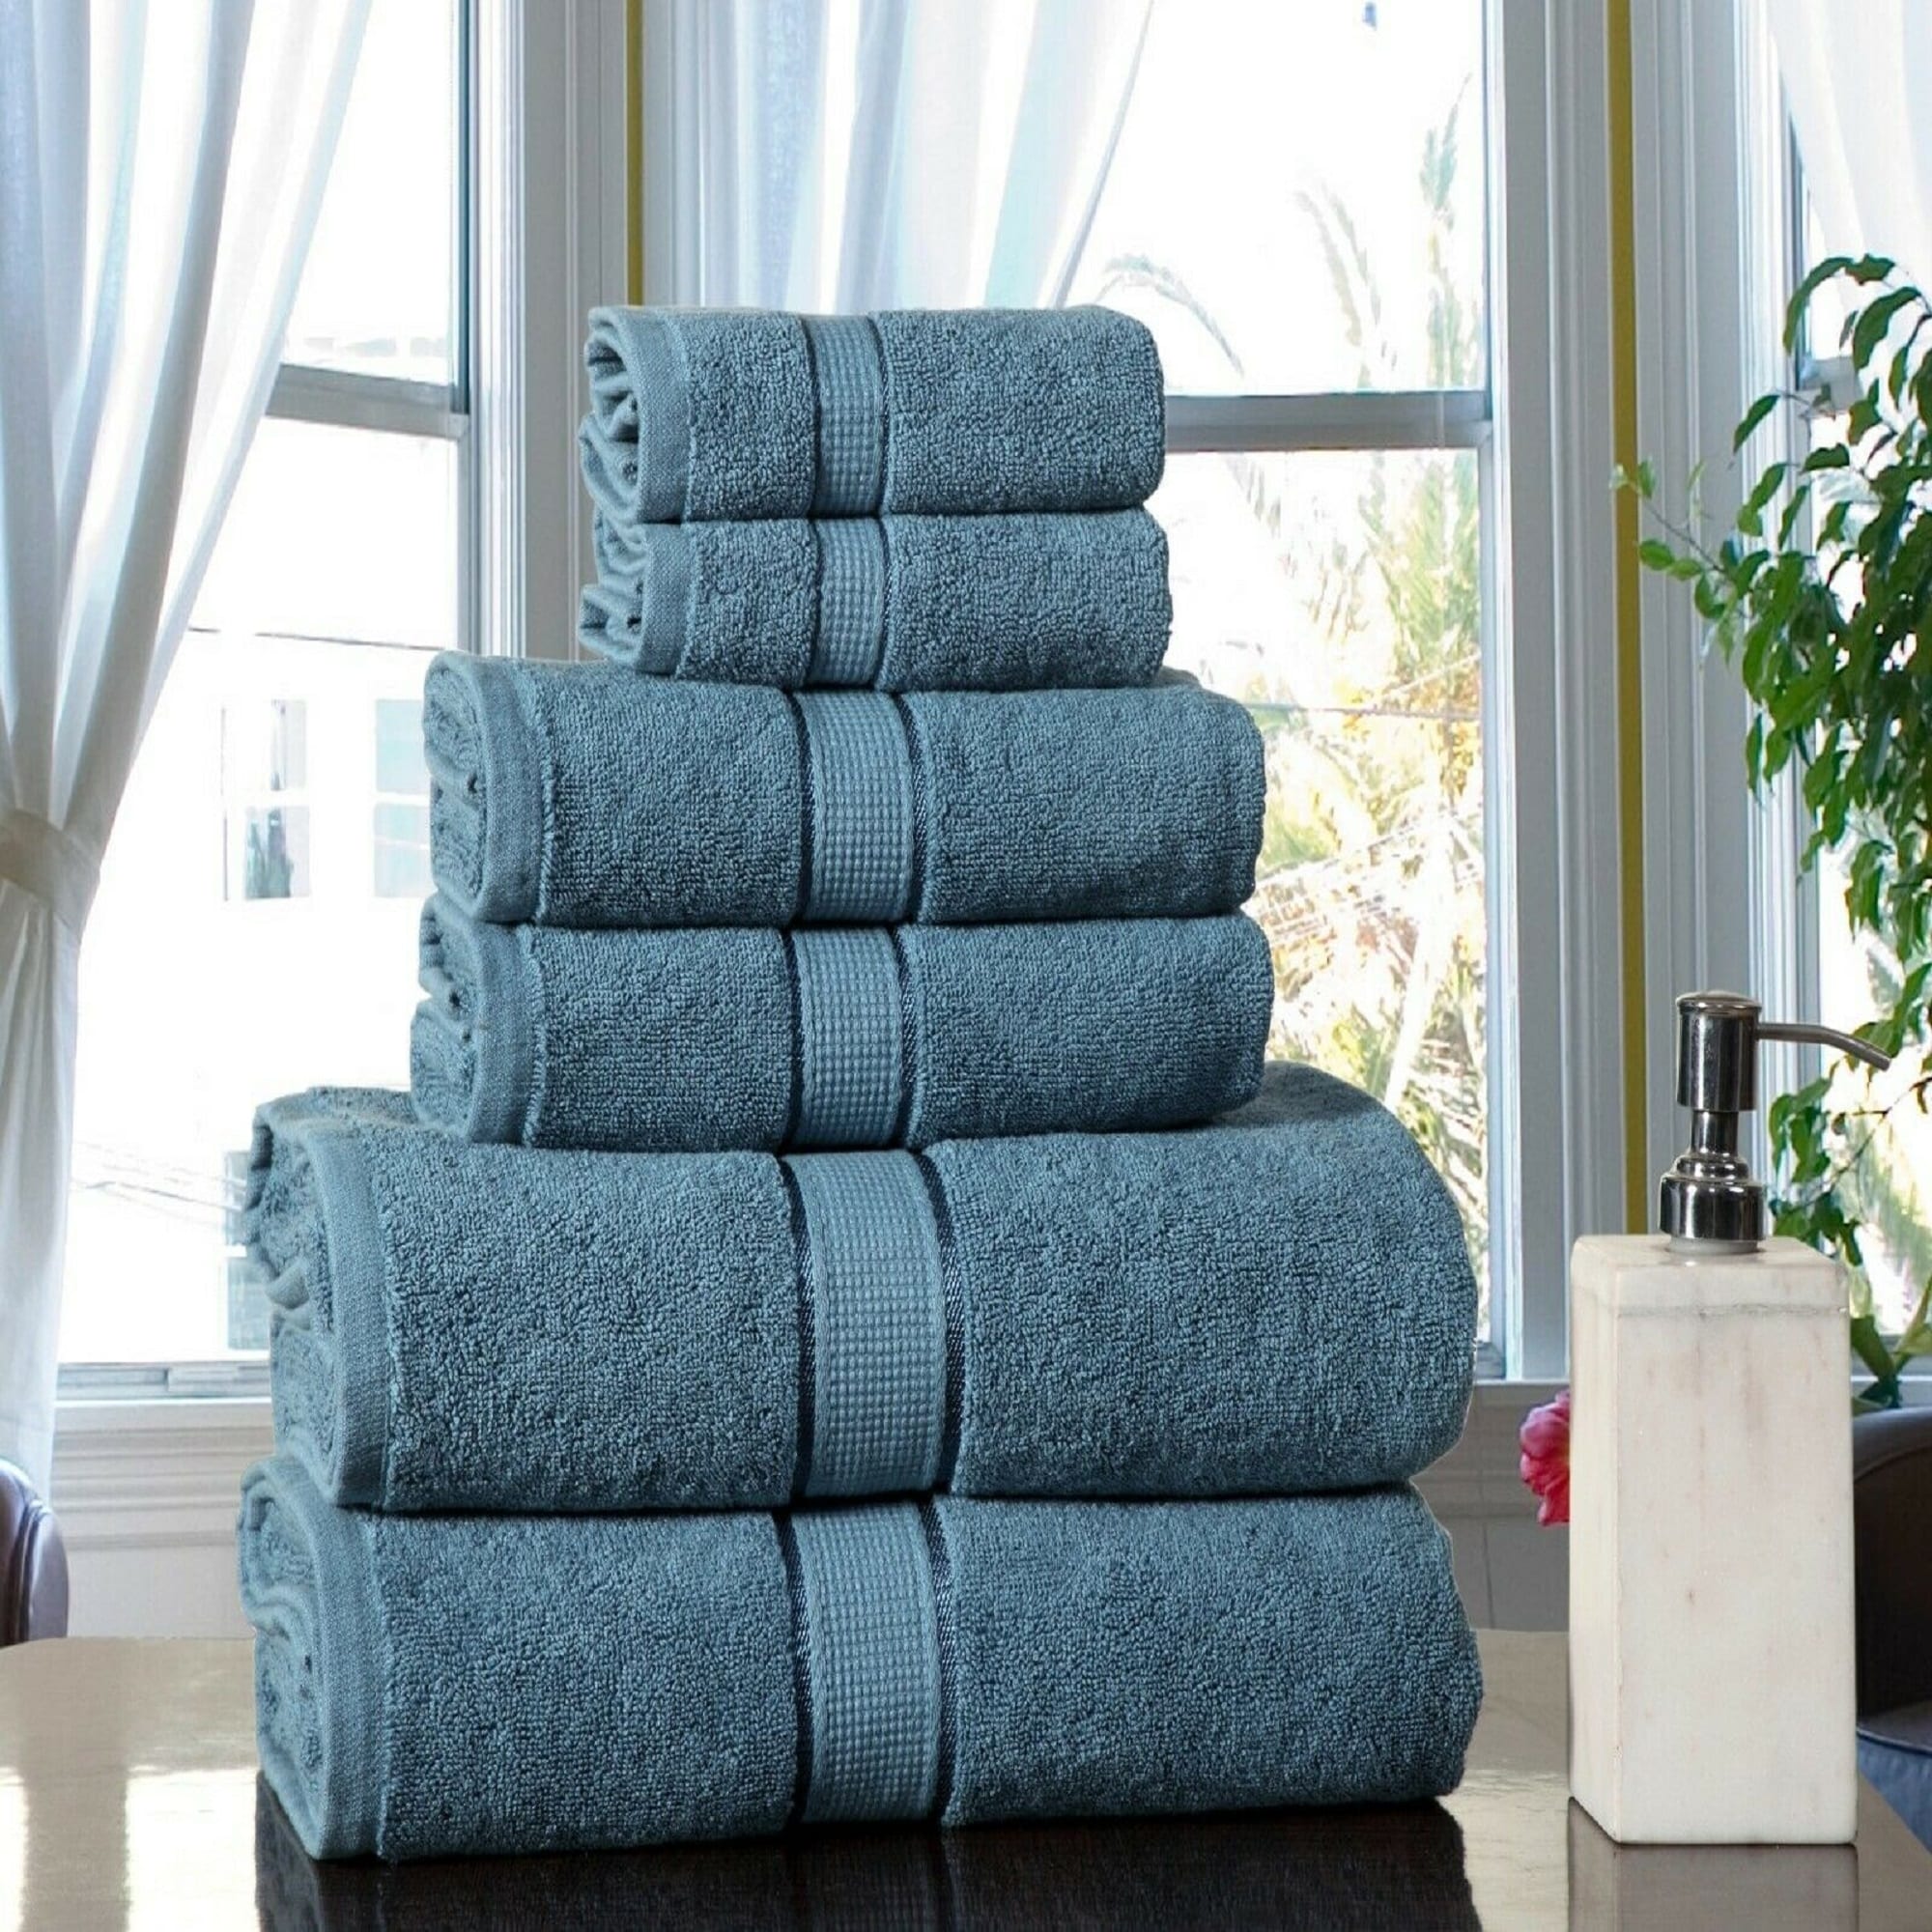 100% Combed Cotton Super Soft Absorbent 6 Piece Bathroom Towel Bale Set 